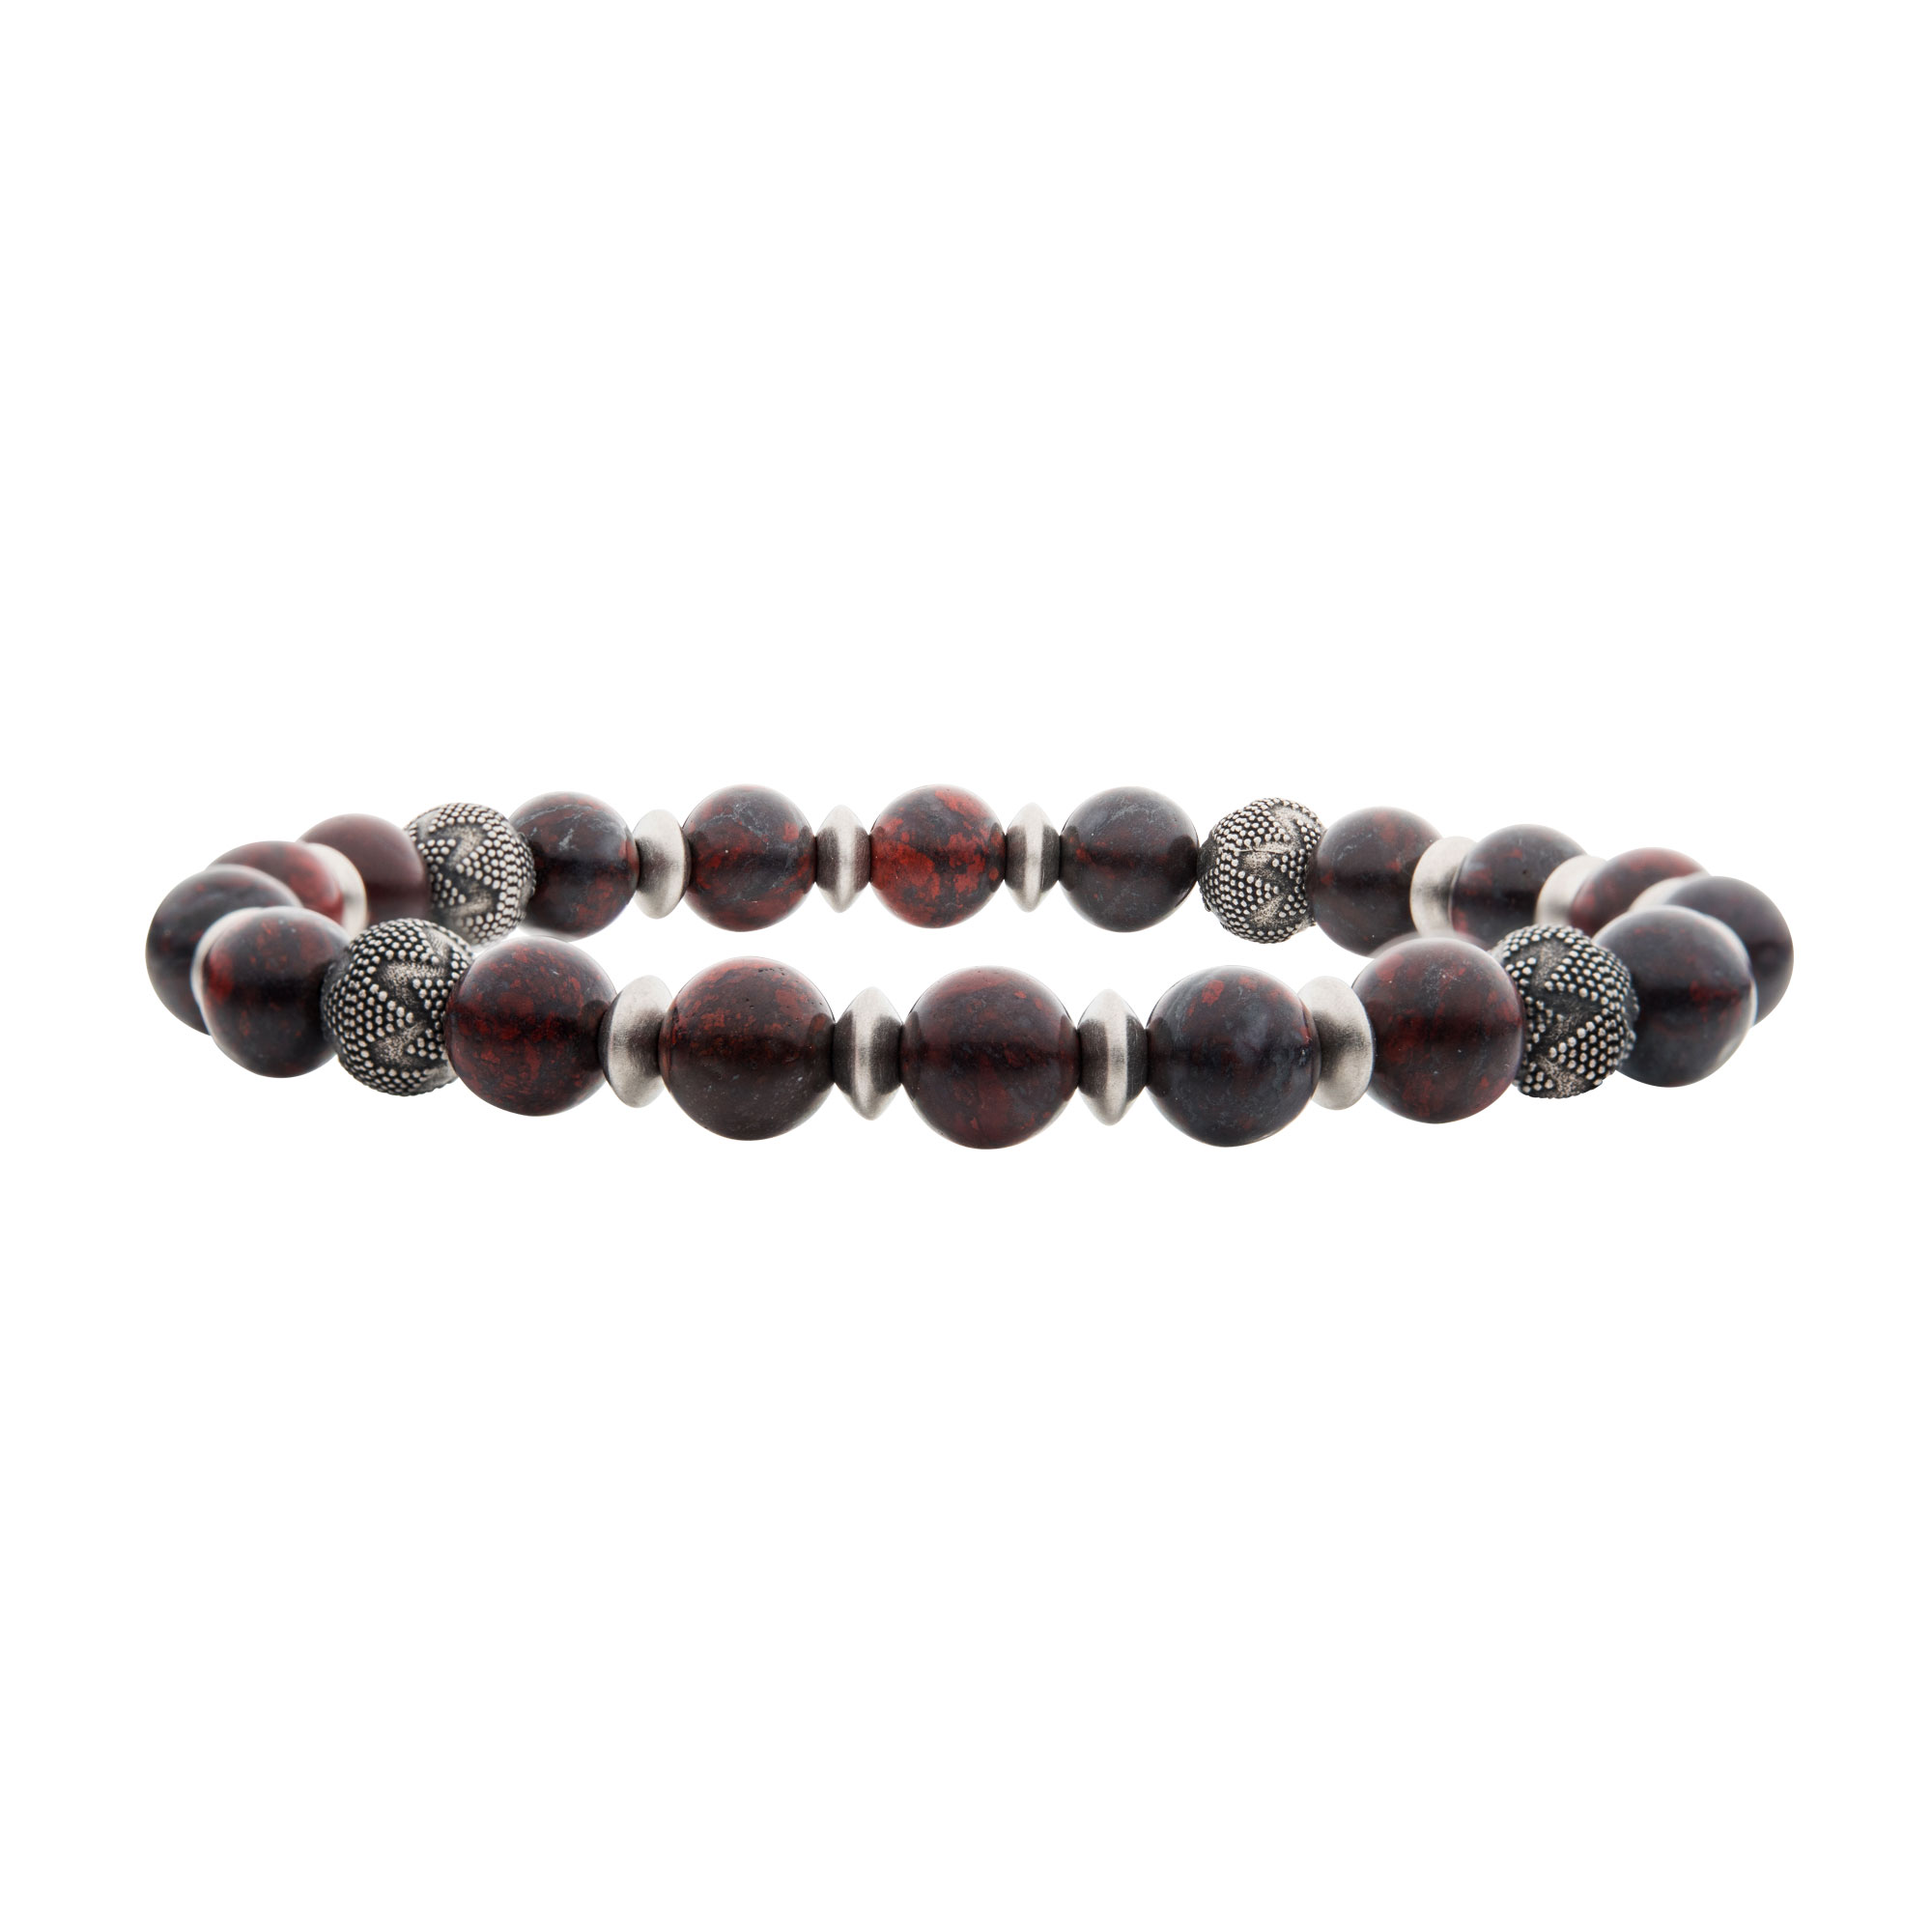 Leopard Stones with Black Oxidized Beads Bracelet Enchanted Jewelry Plainfield, CT